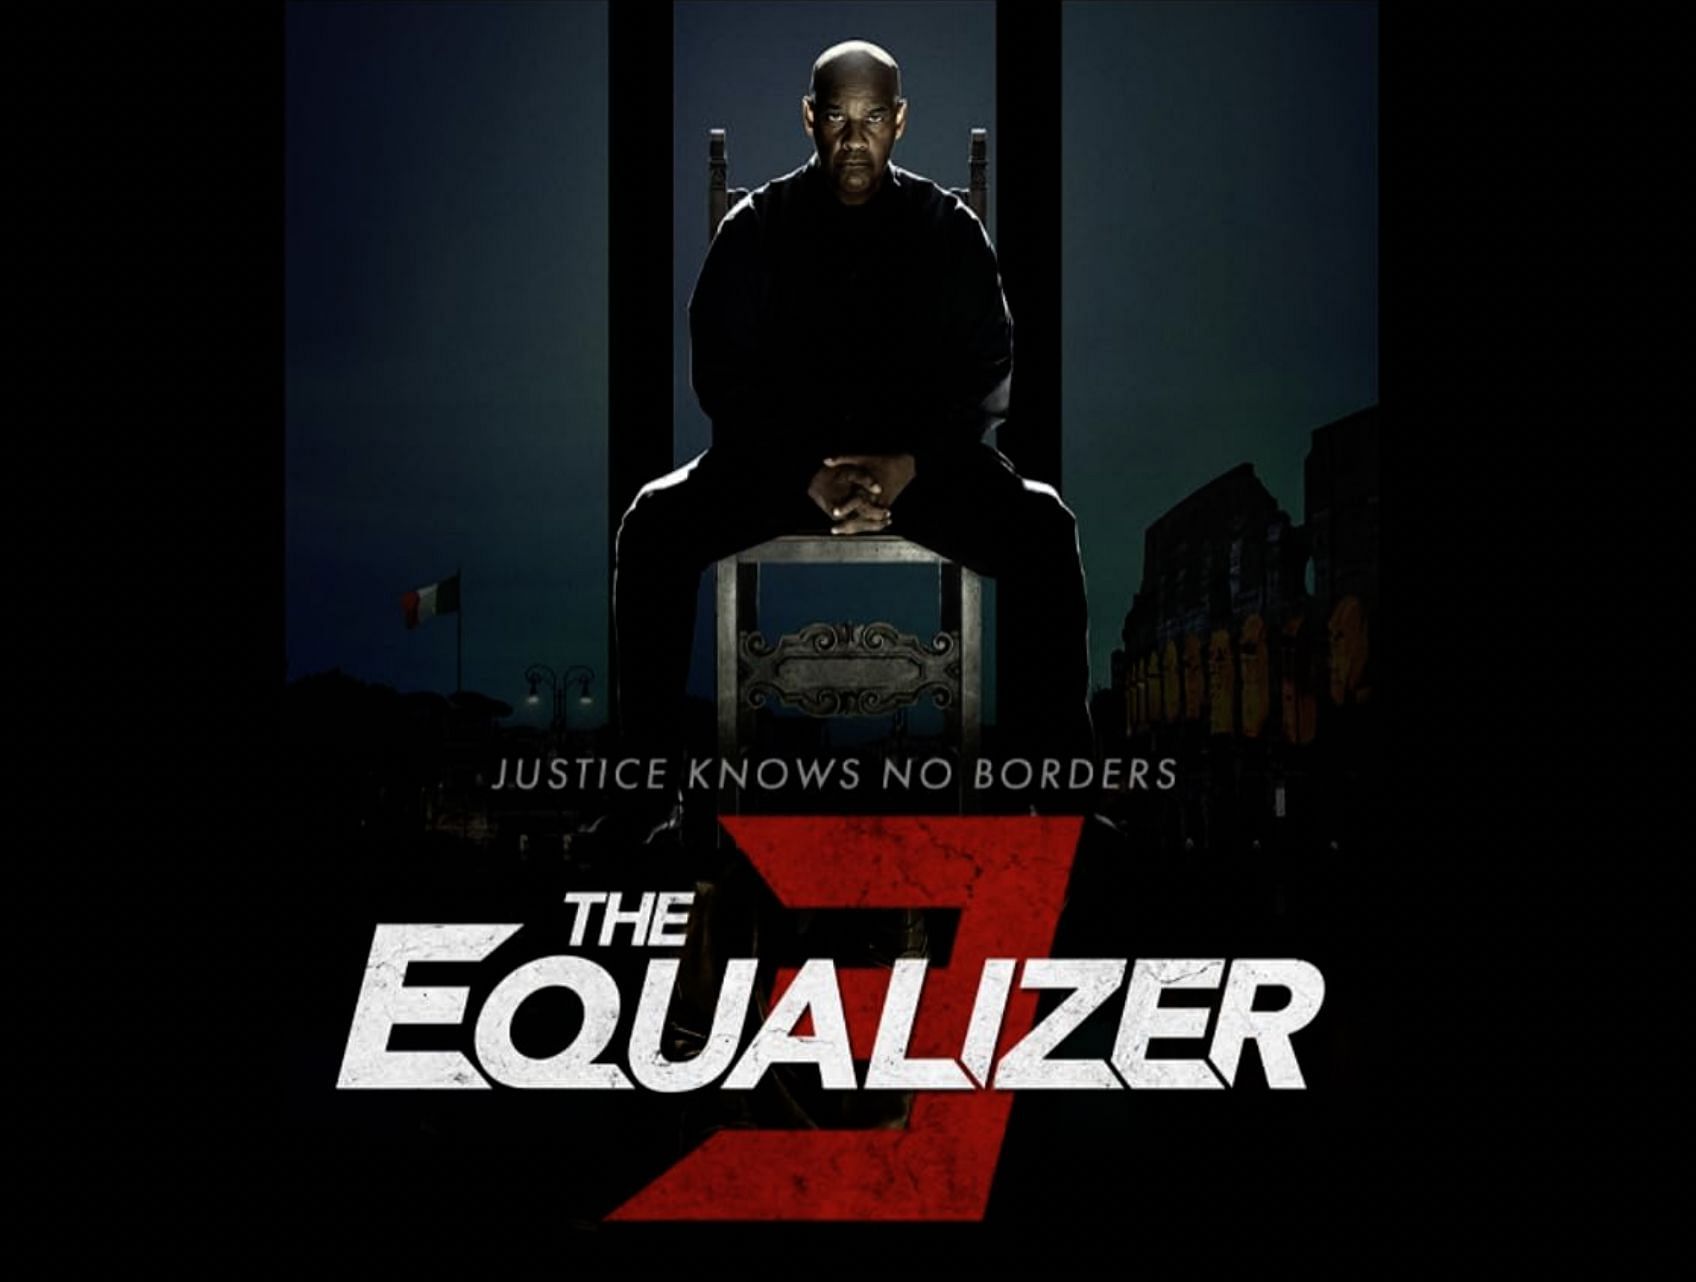 The Equalizer 3 Postr. Image via IMDB.